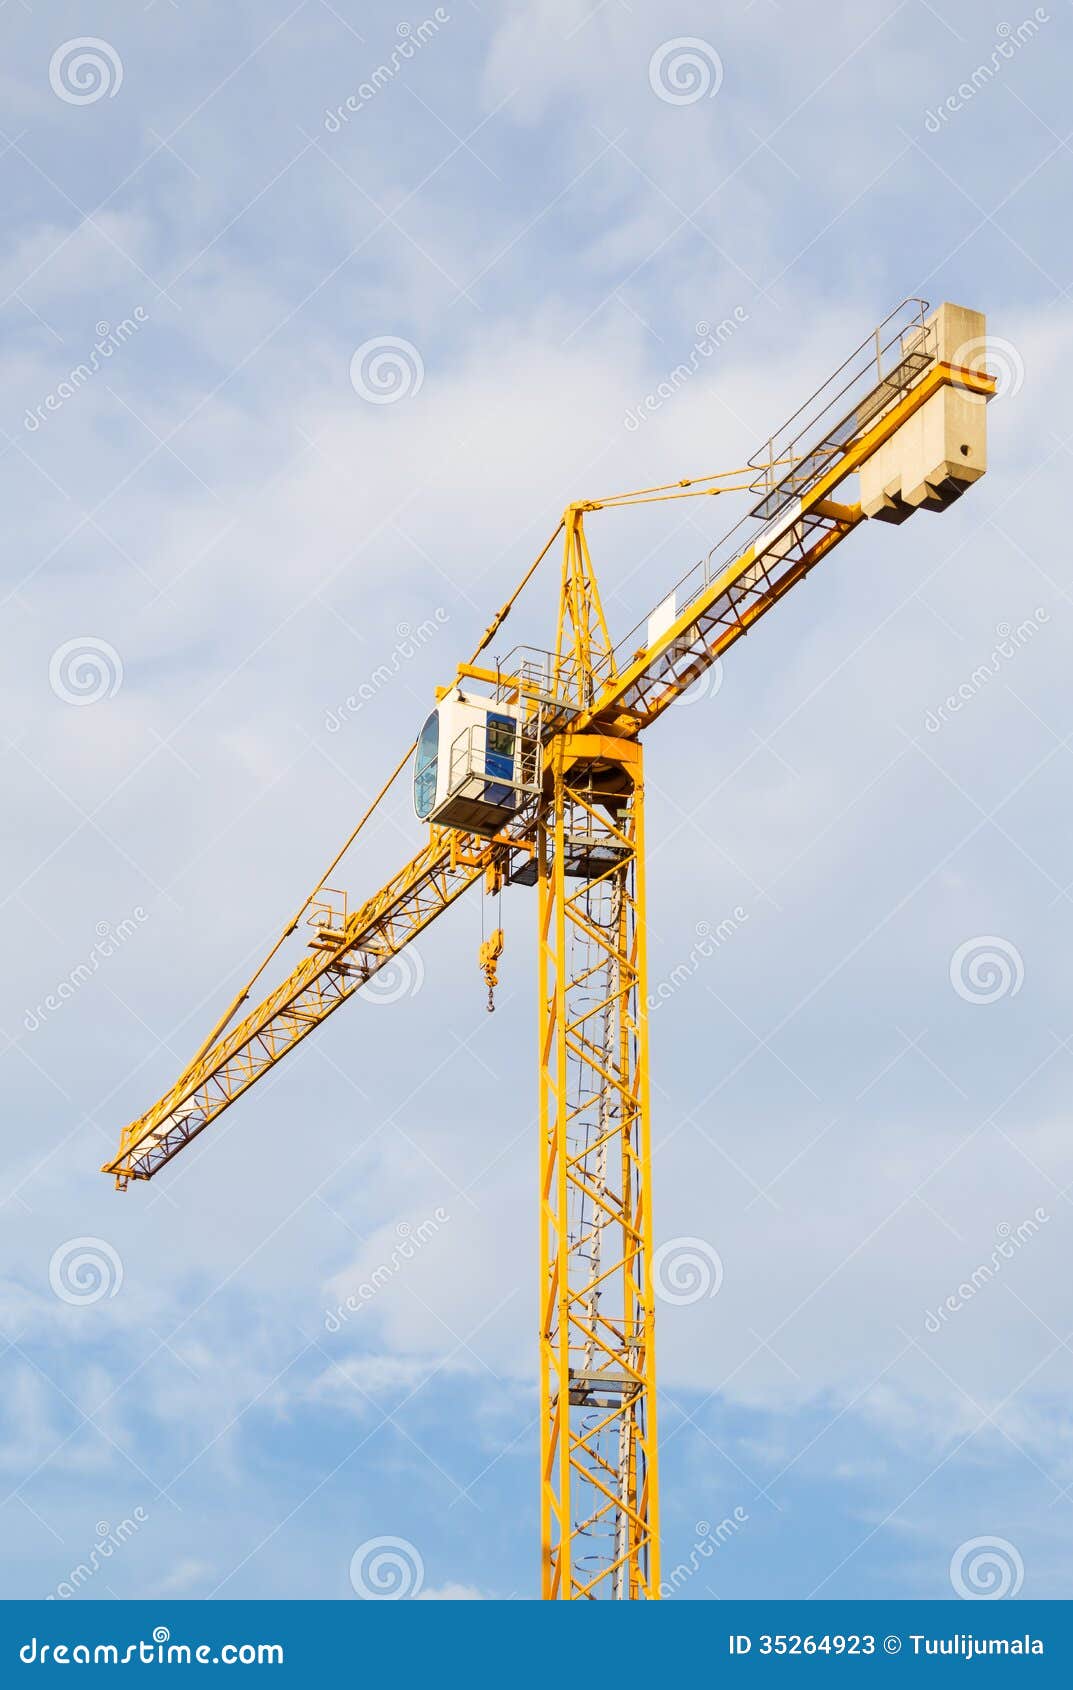 yellow stationary hoist crane